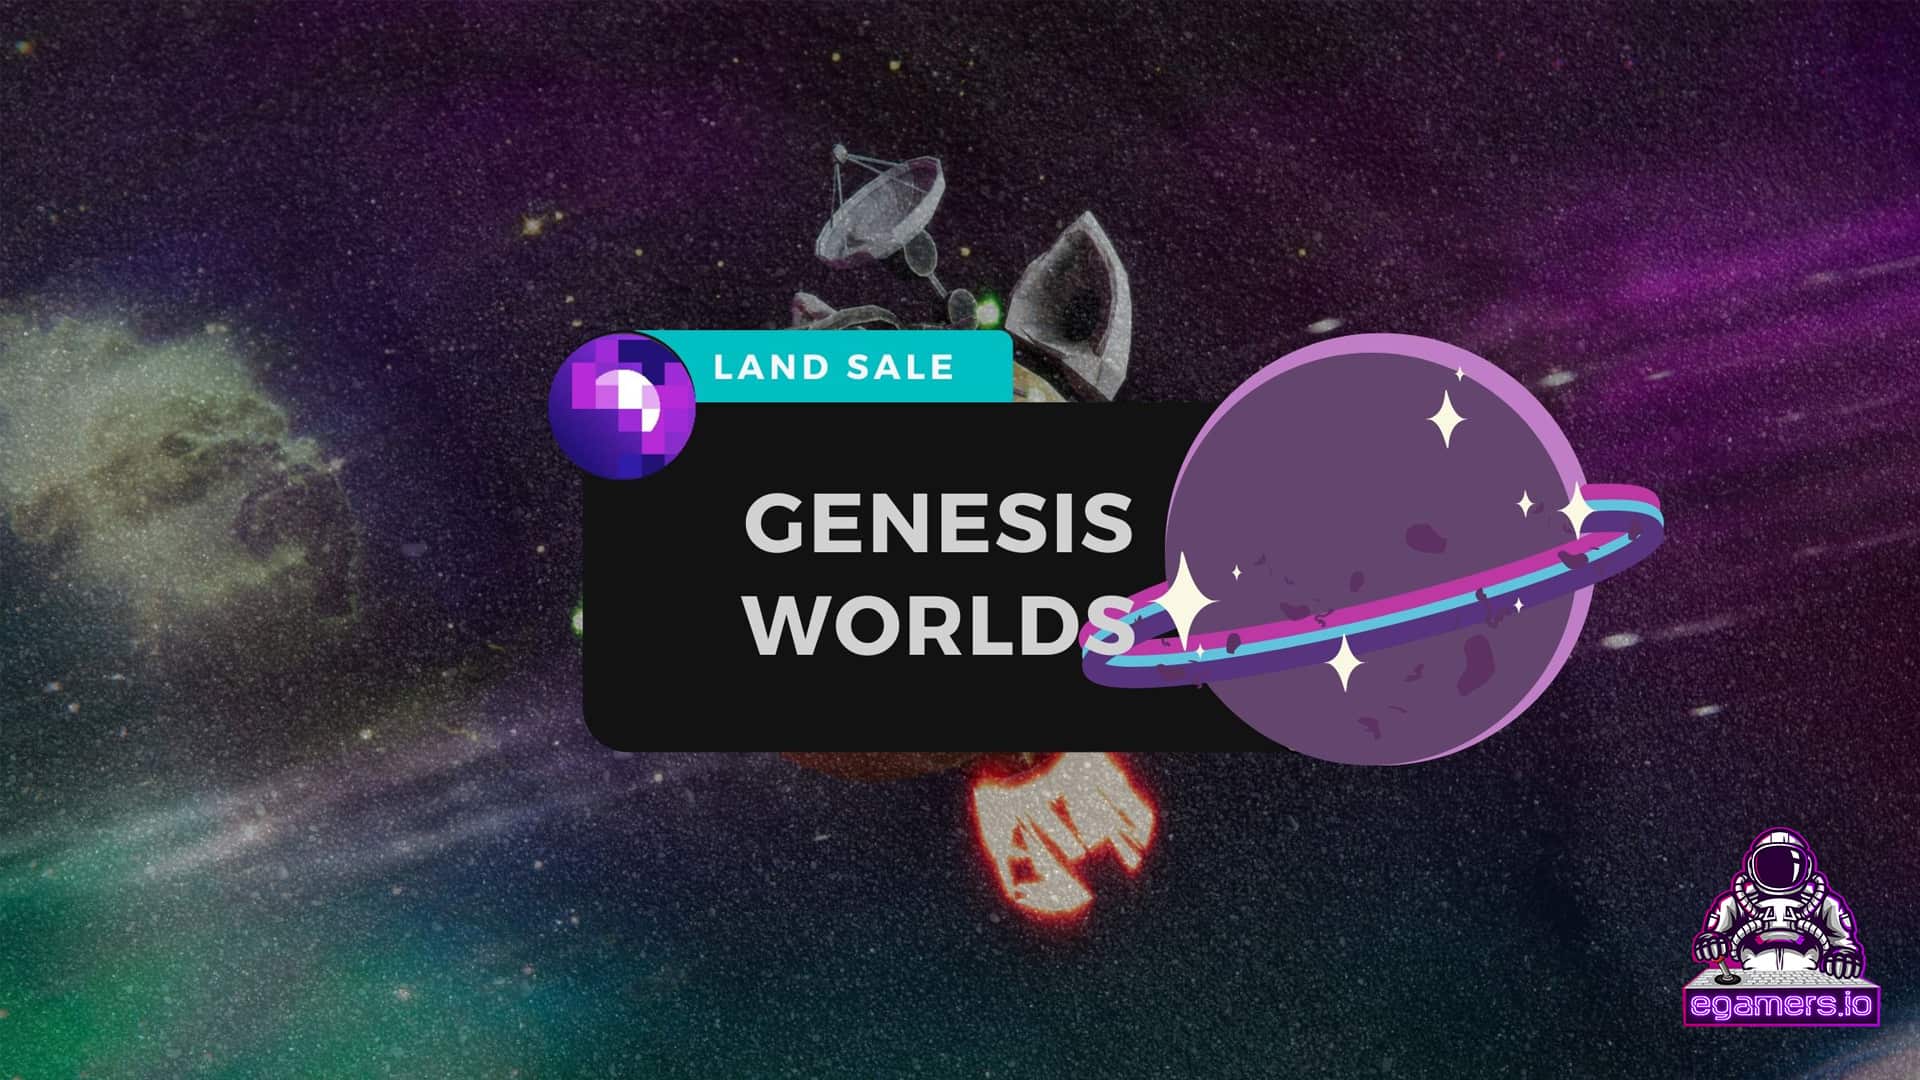 Genesis World Land Sale